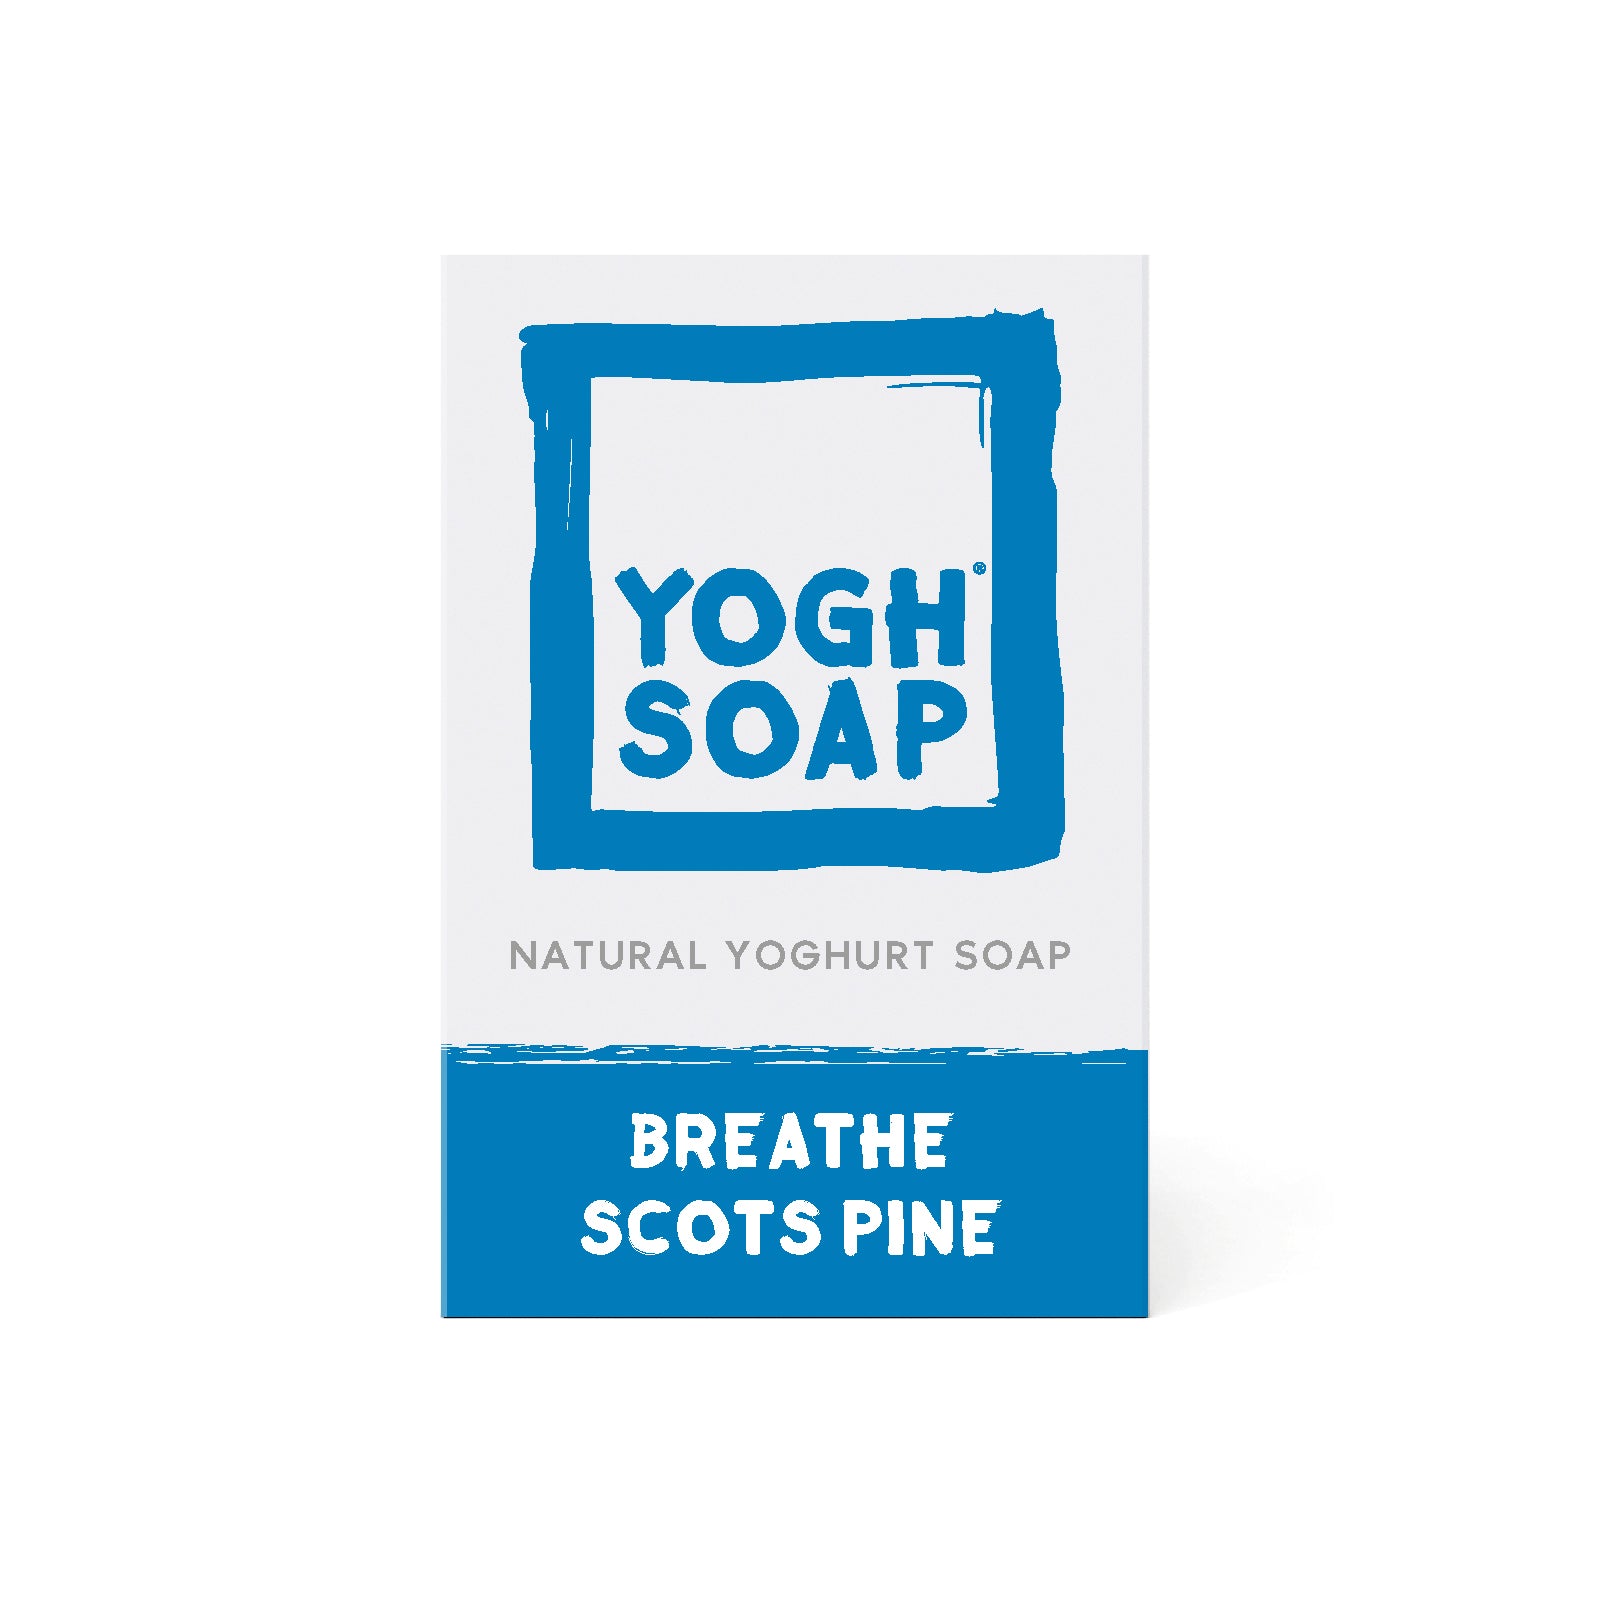 YOGHSOAP® Breathe White Pine, 100g.